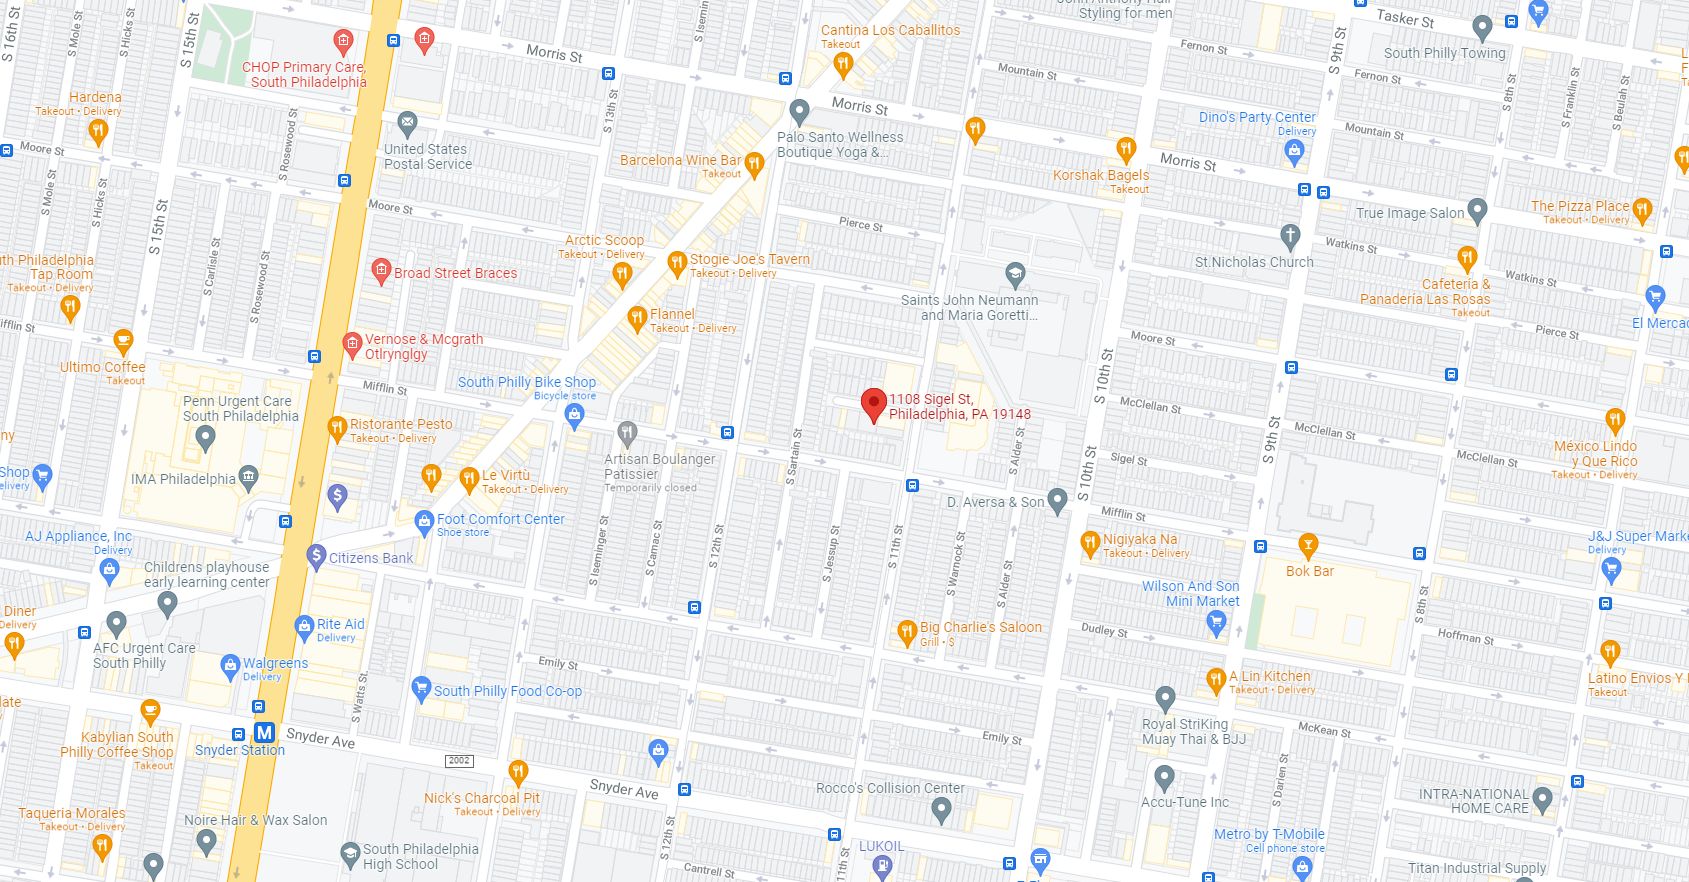 1108-12 Sigel Street. Credit: Google Maps